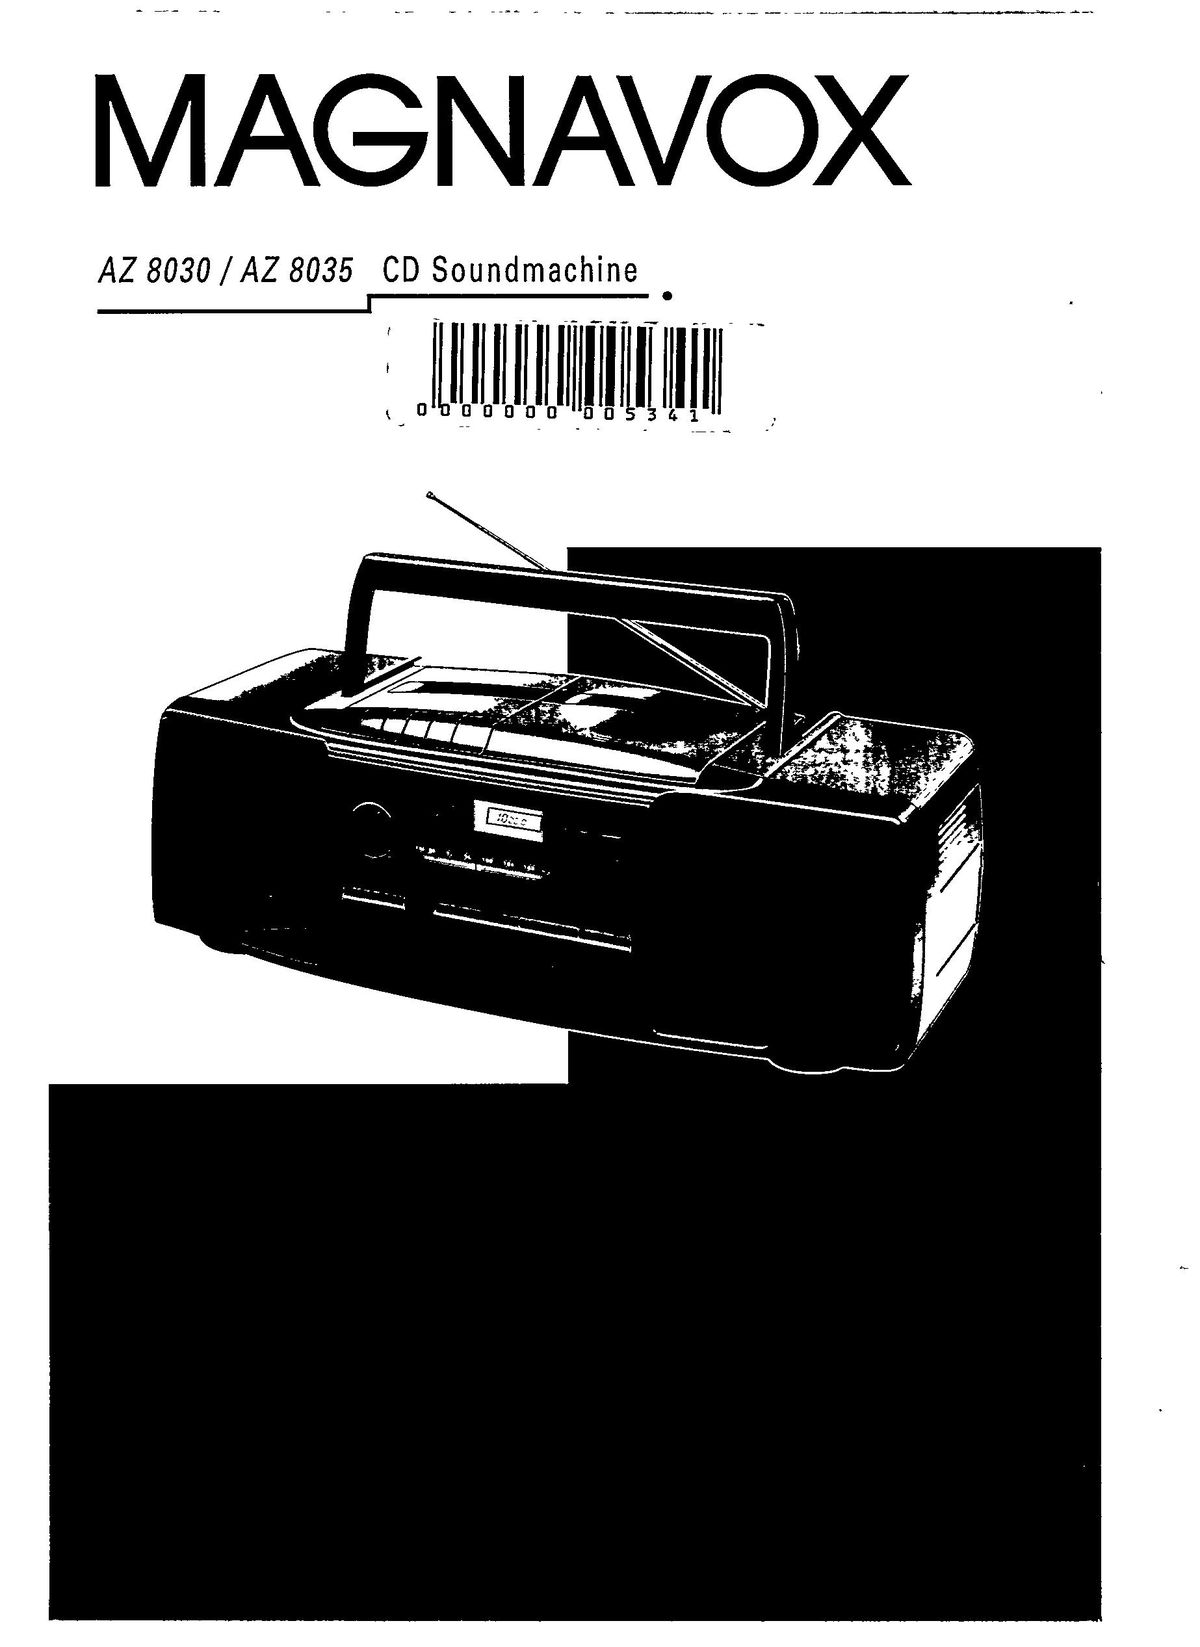 Magnavox AZ 8030 Portable CD Player User Manual